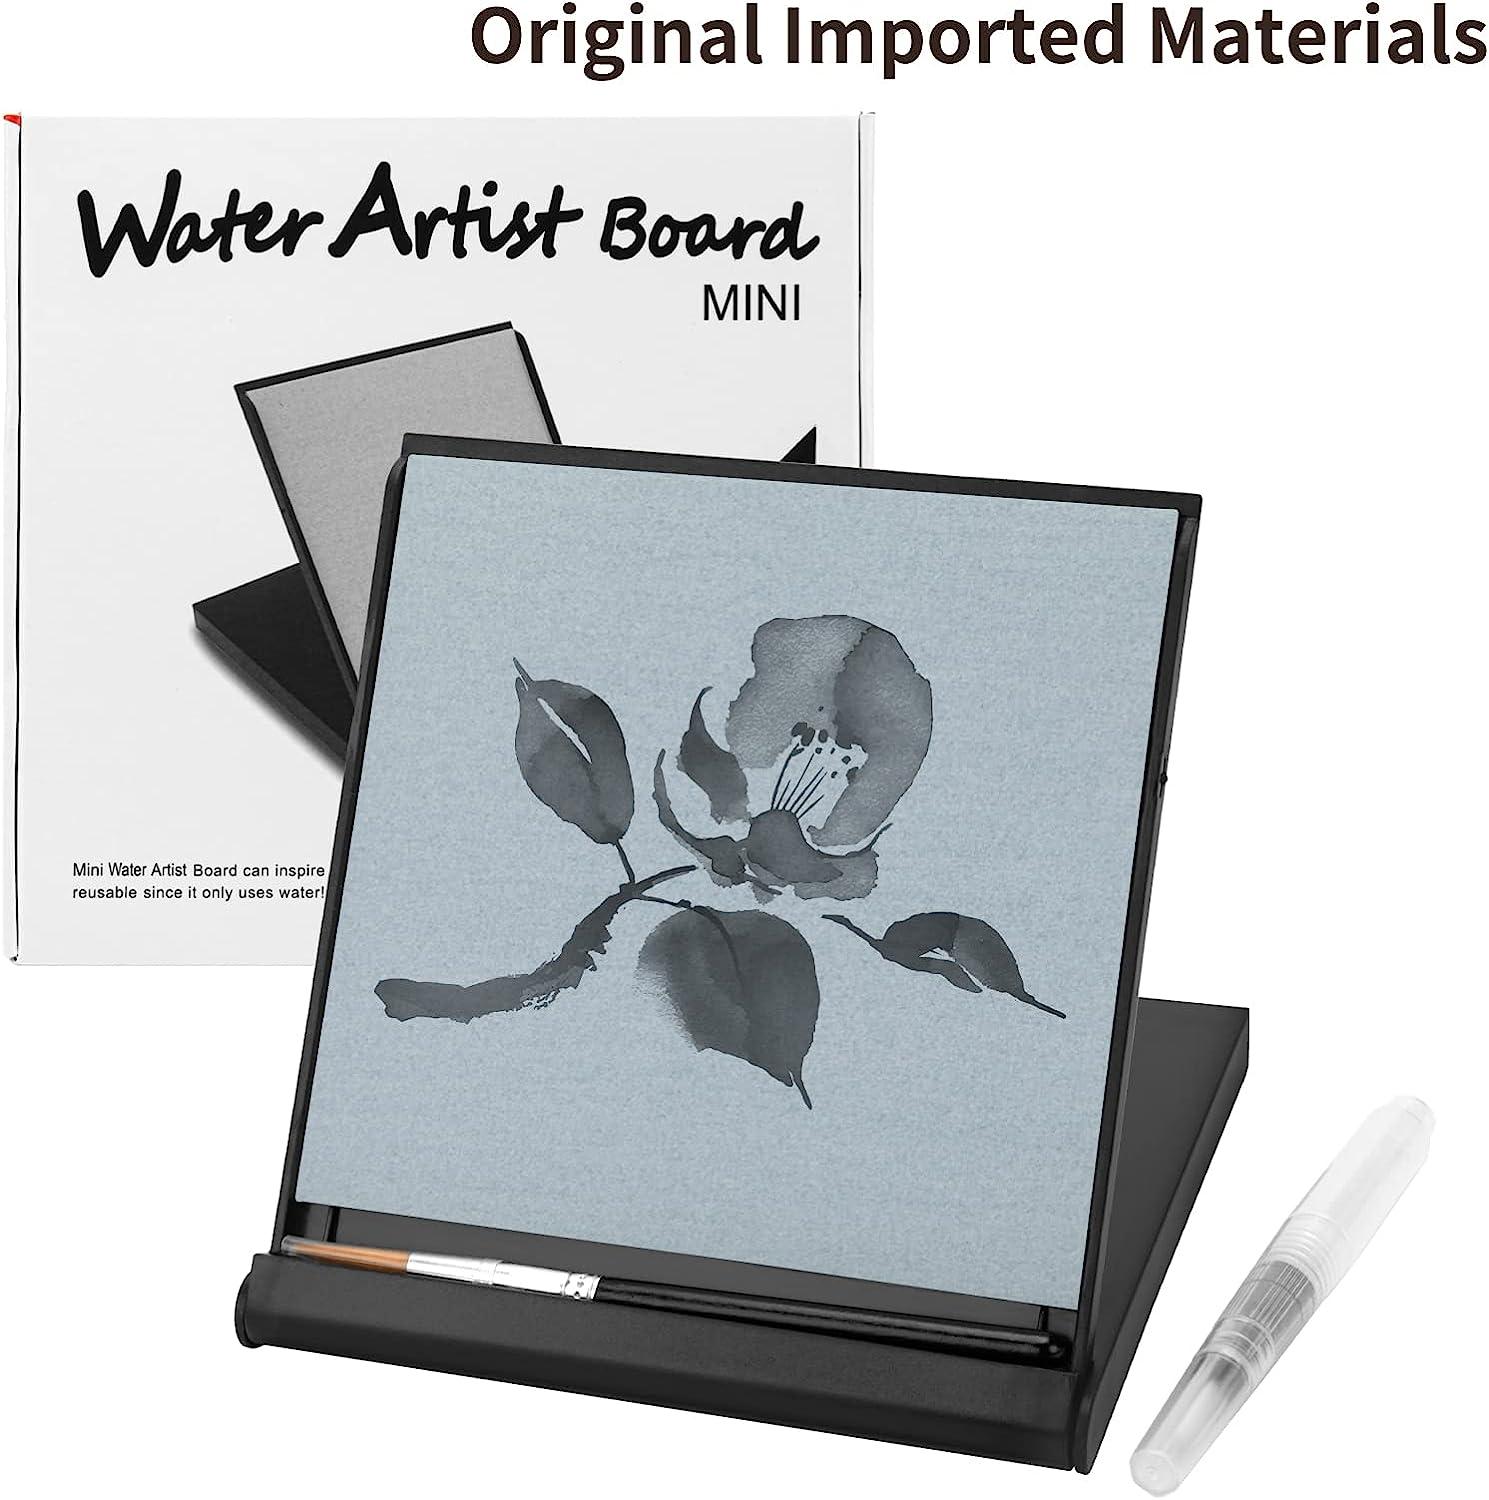 Drawing Board Imaging, Drawing Sketch Board, Art Supplies Drawing